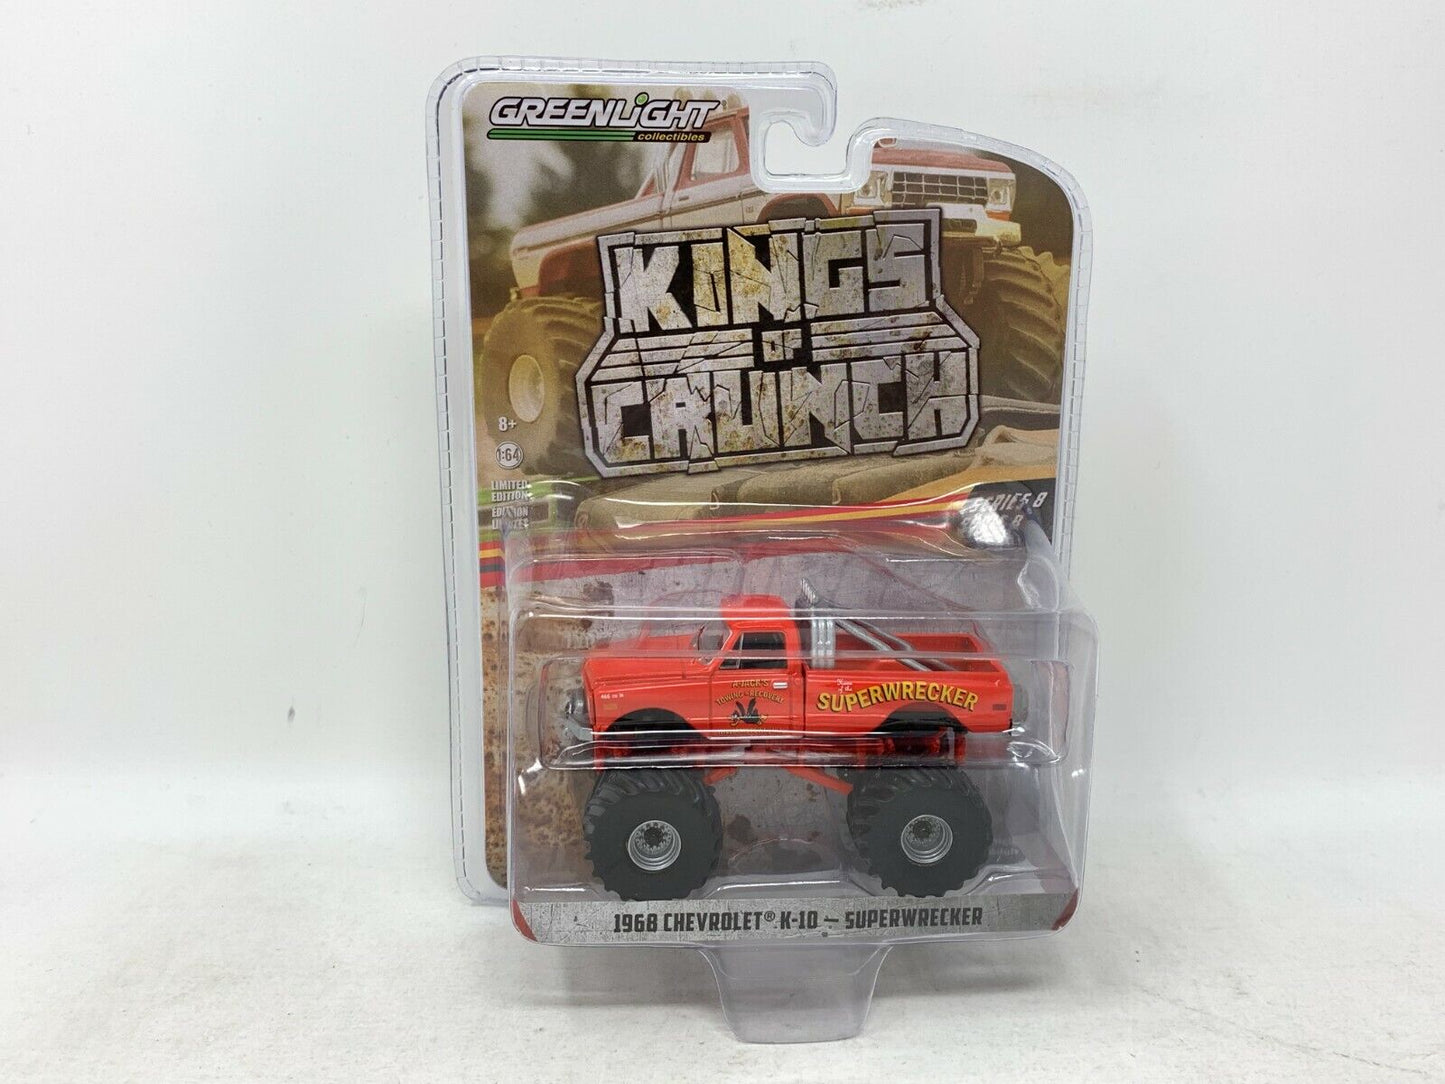 Greenlight Kings of Crunch Series 8 1968 Chevy K-10 Super wrecker 1:64 Diecast